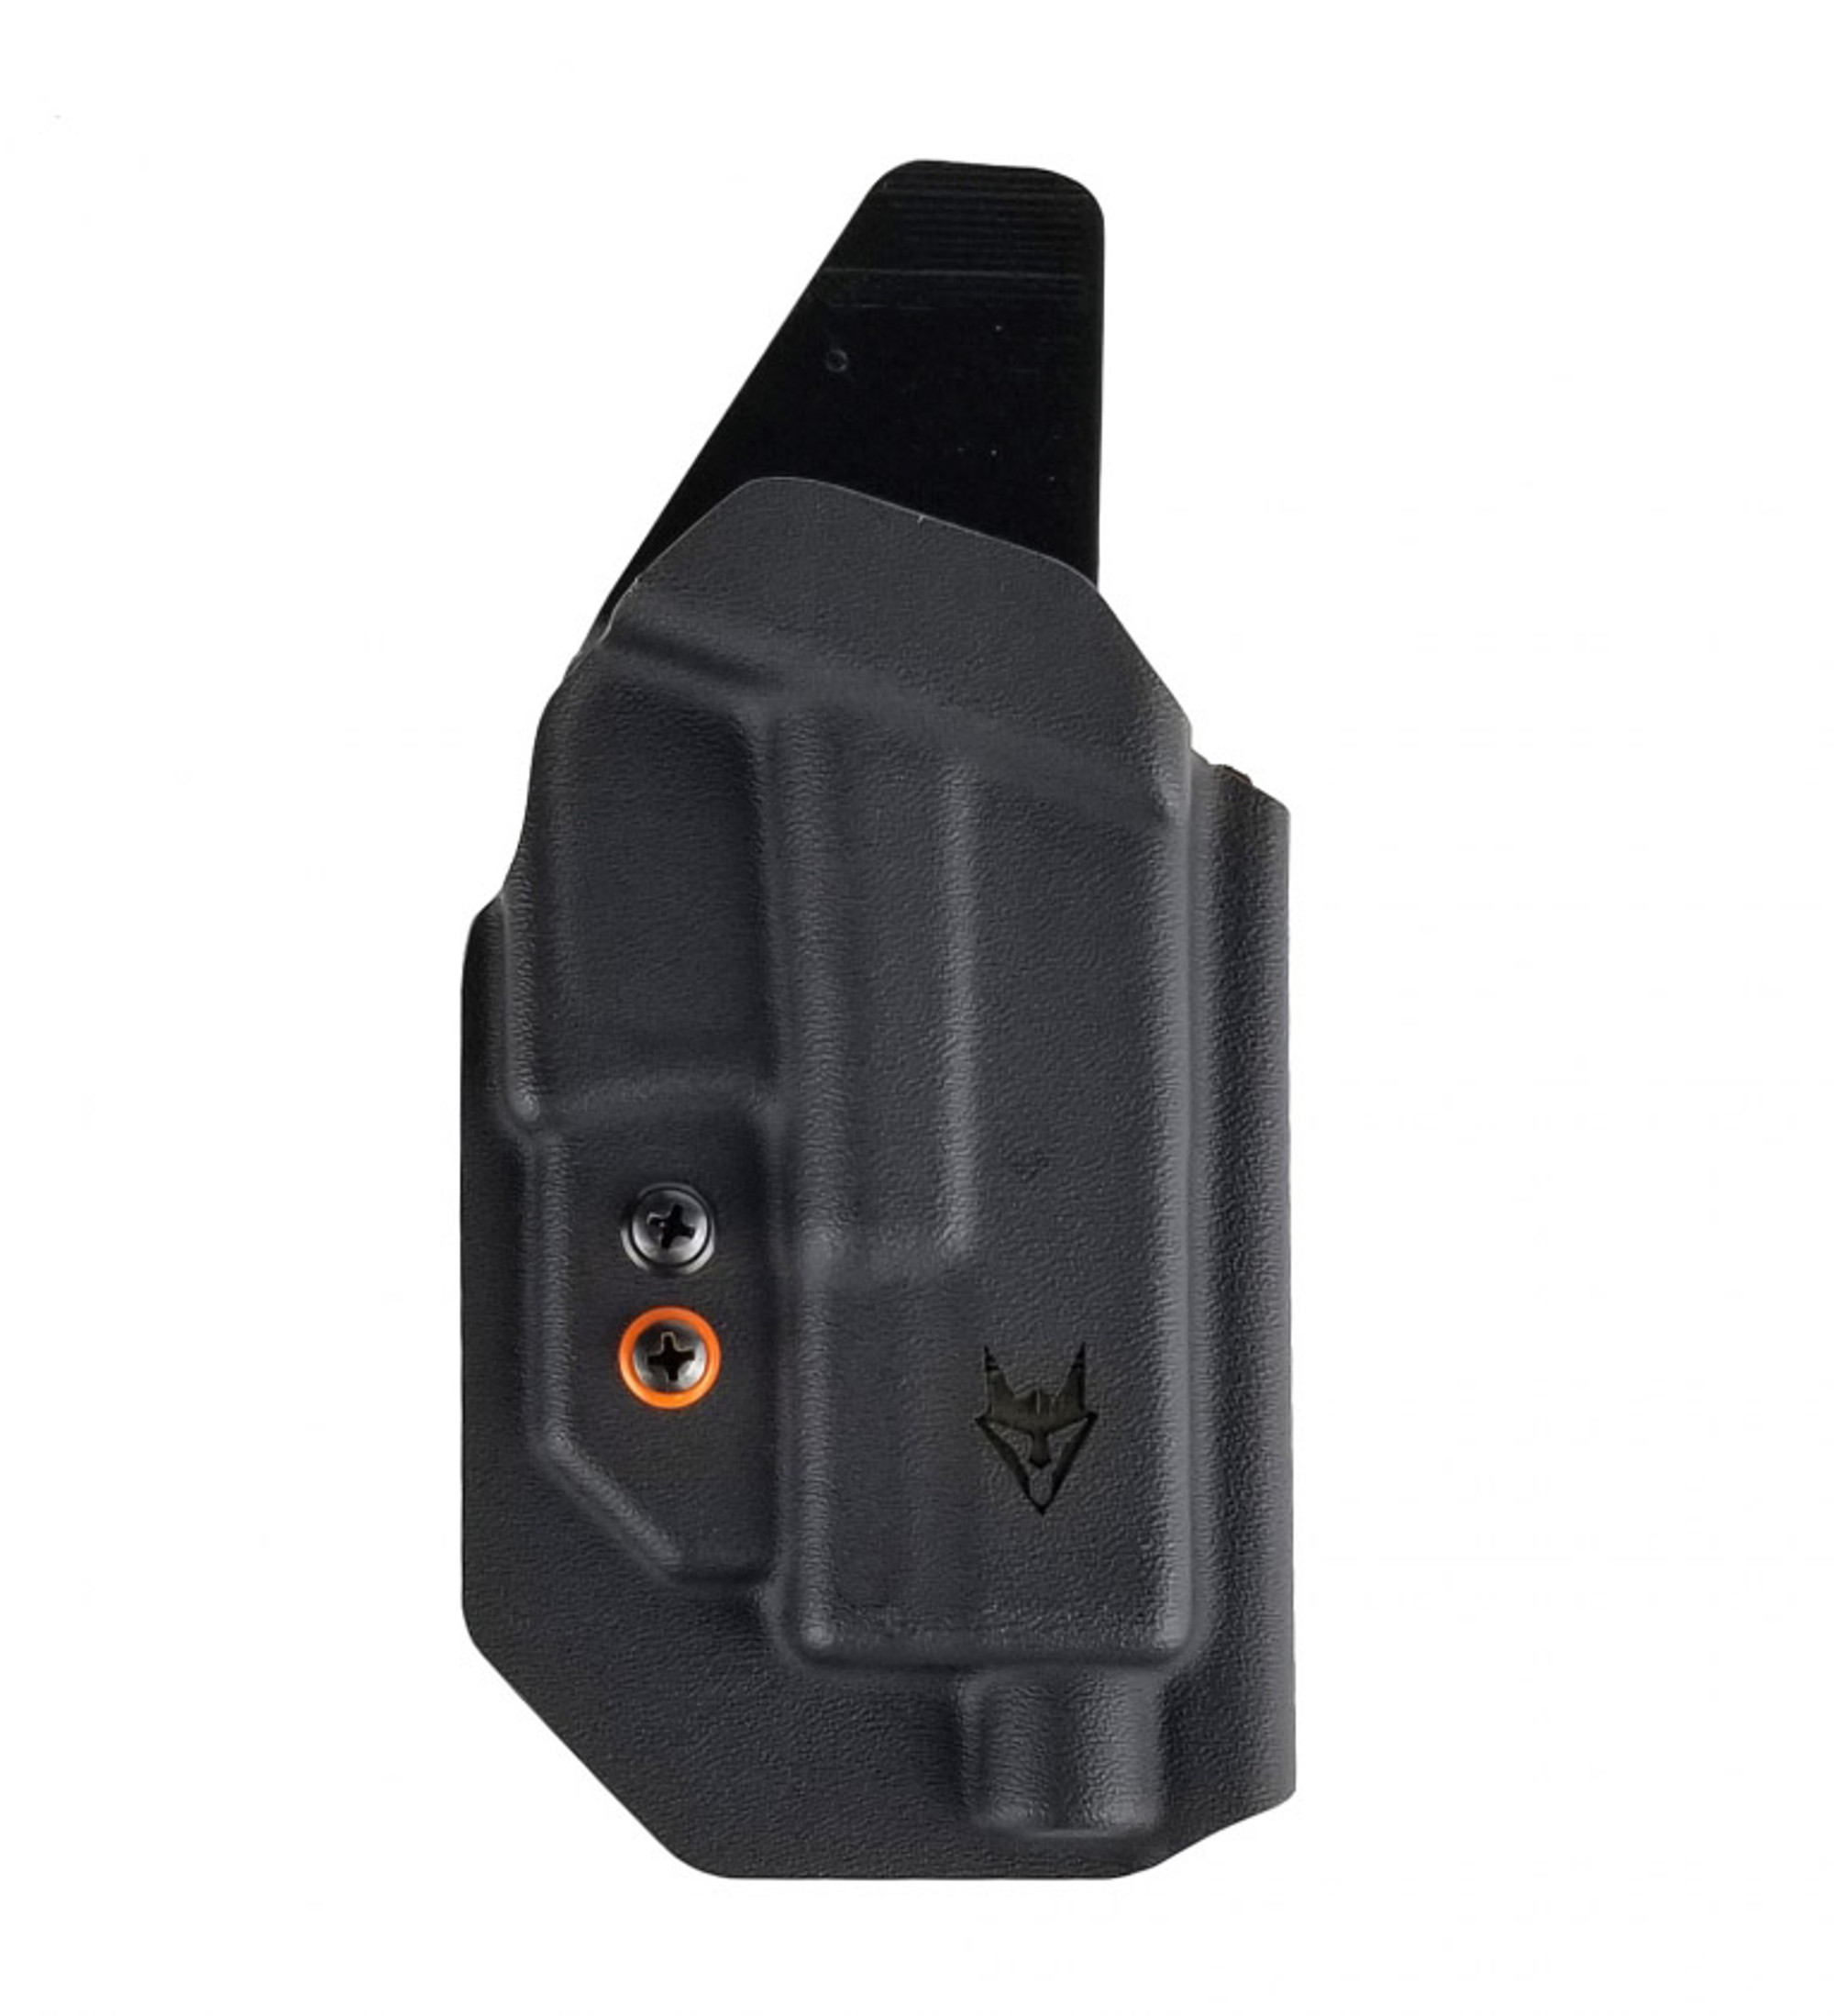 Cerberus Glock G17/22 Holster Black